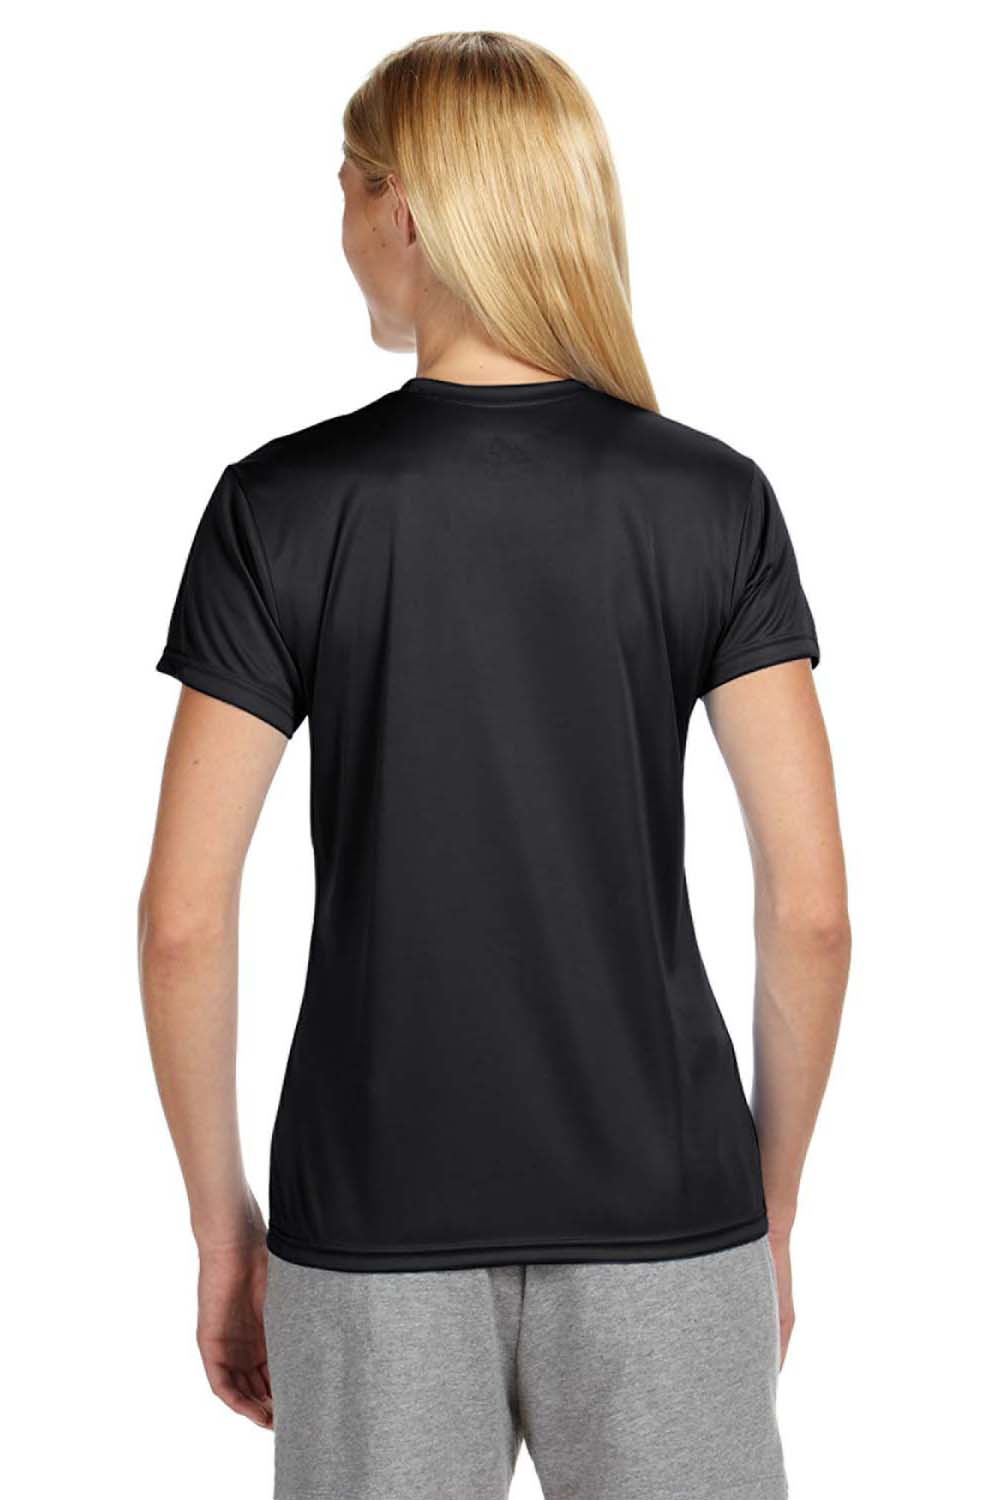 A4 NW3201 Womens Performance Moisture Wicking Short Sleeve Crewneck T-Shirt Black Model Back